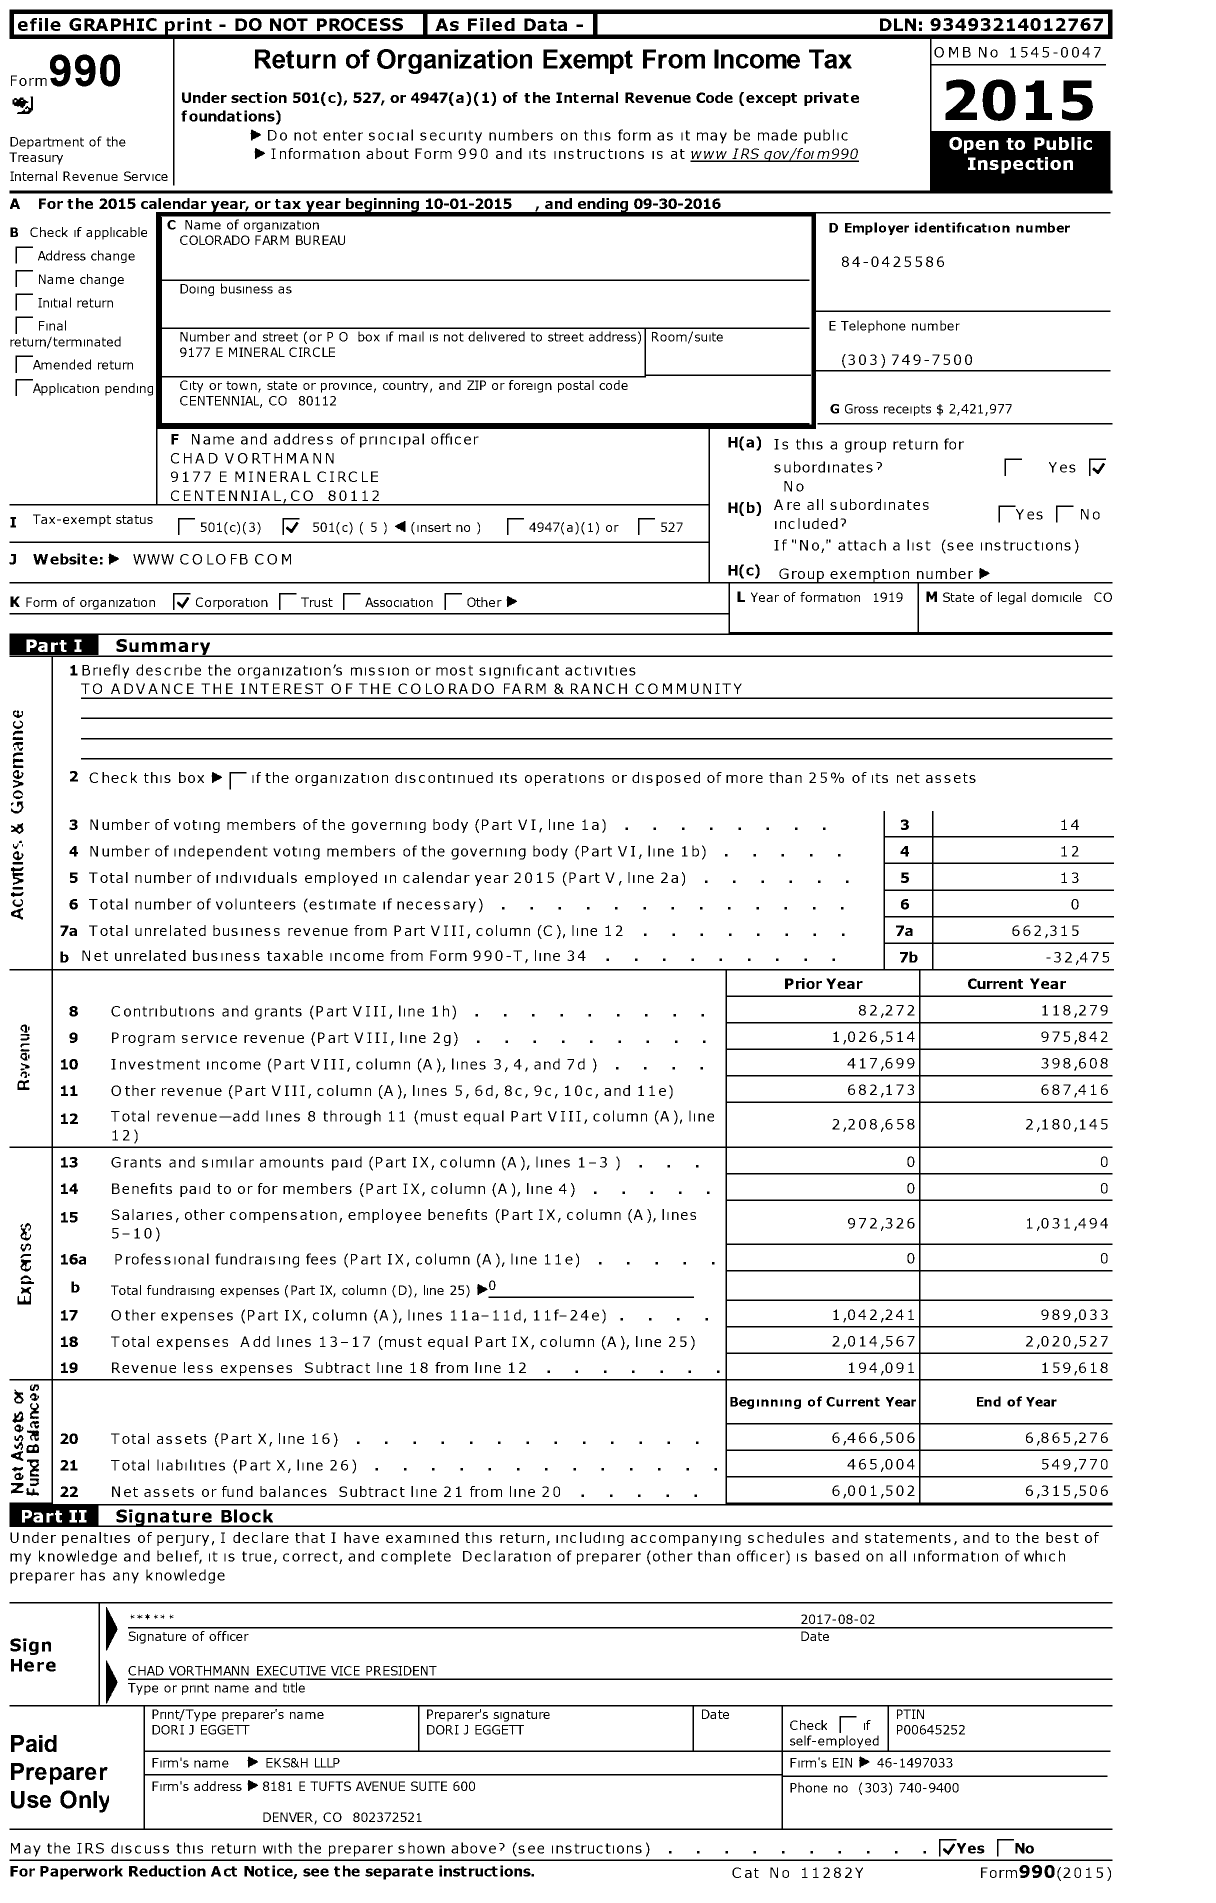 Image of first page of 2015 Form 990O for Colorado Farm Bureau